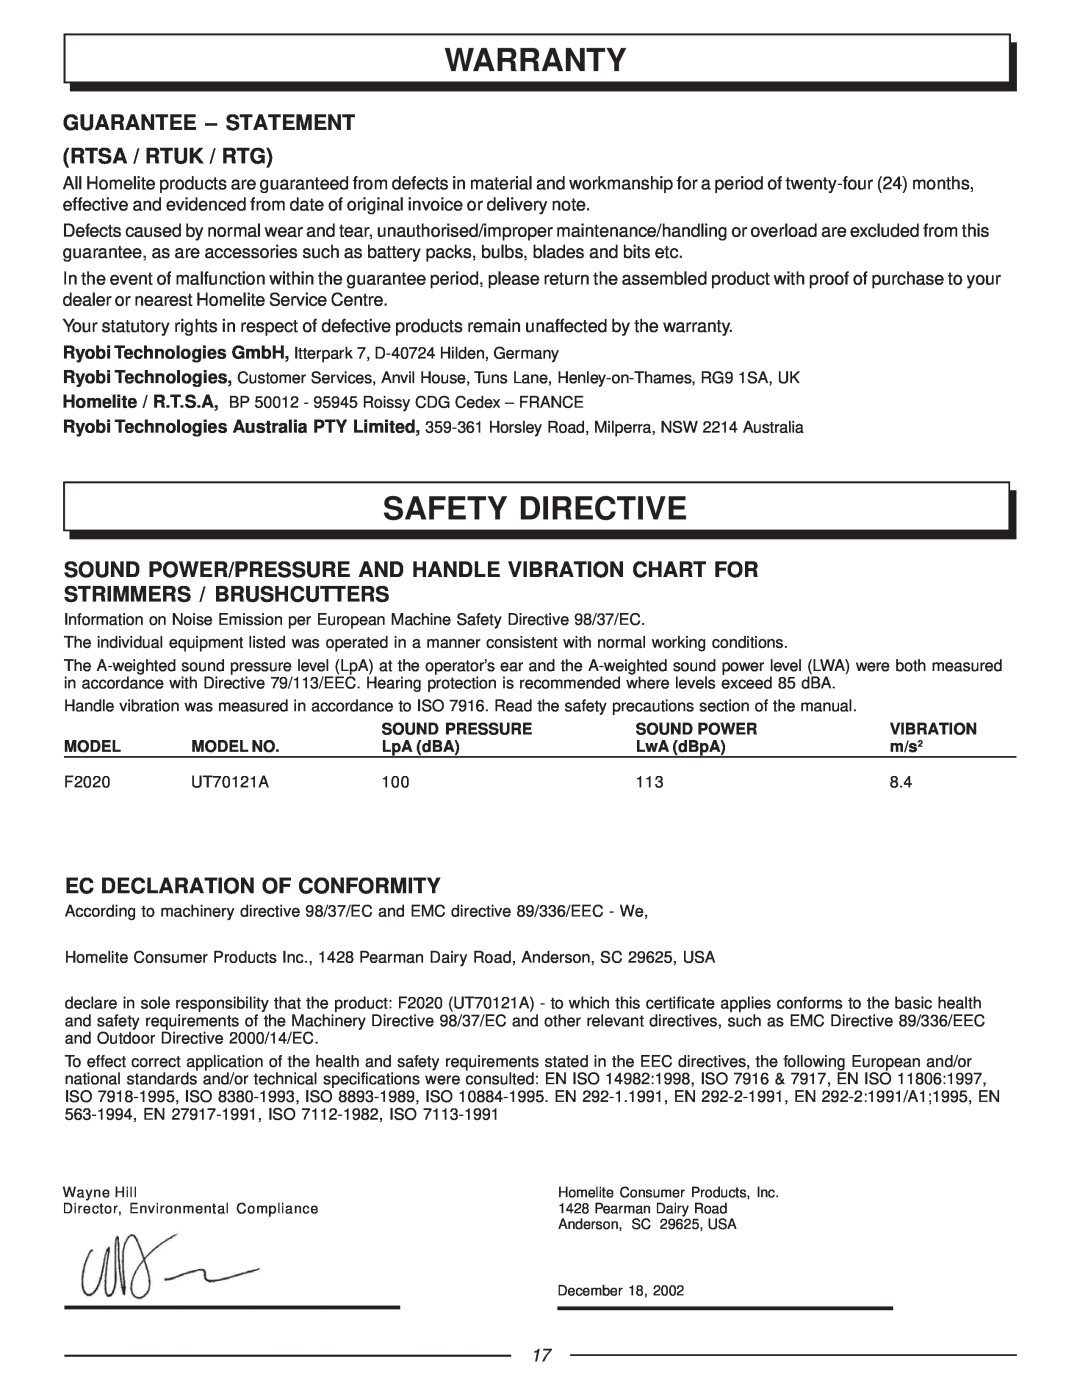 Homelite UT70121A manual Warranty, Safety Directive, Guarantee - Statement Rtsa / Rtuk / Rtg, Strimmers / Brushcutters 